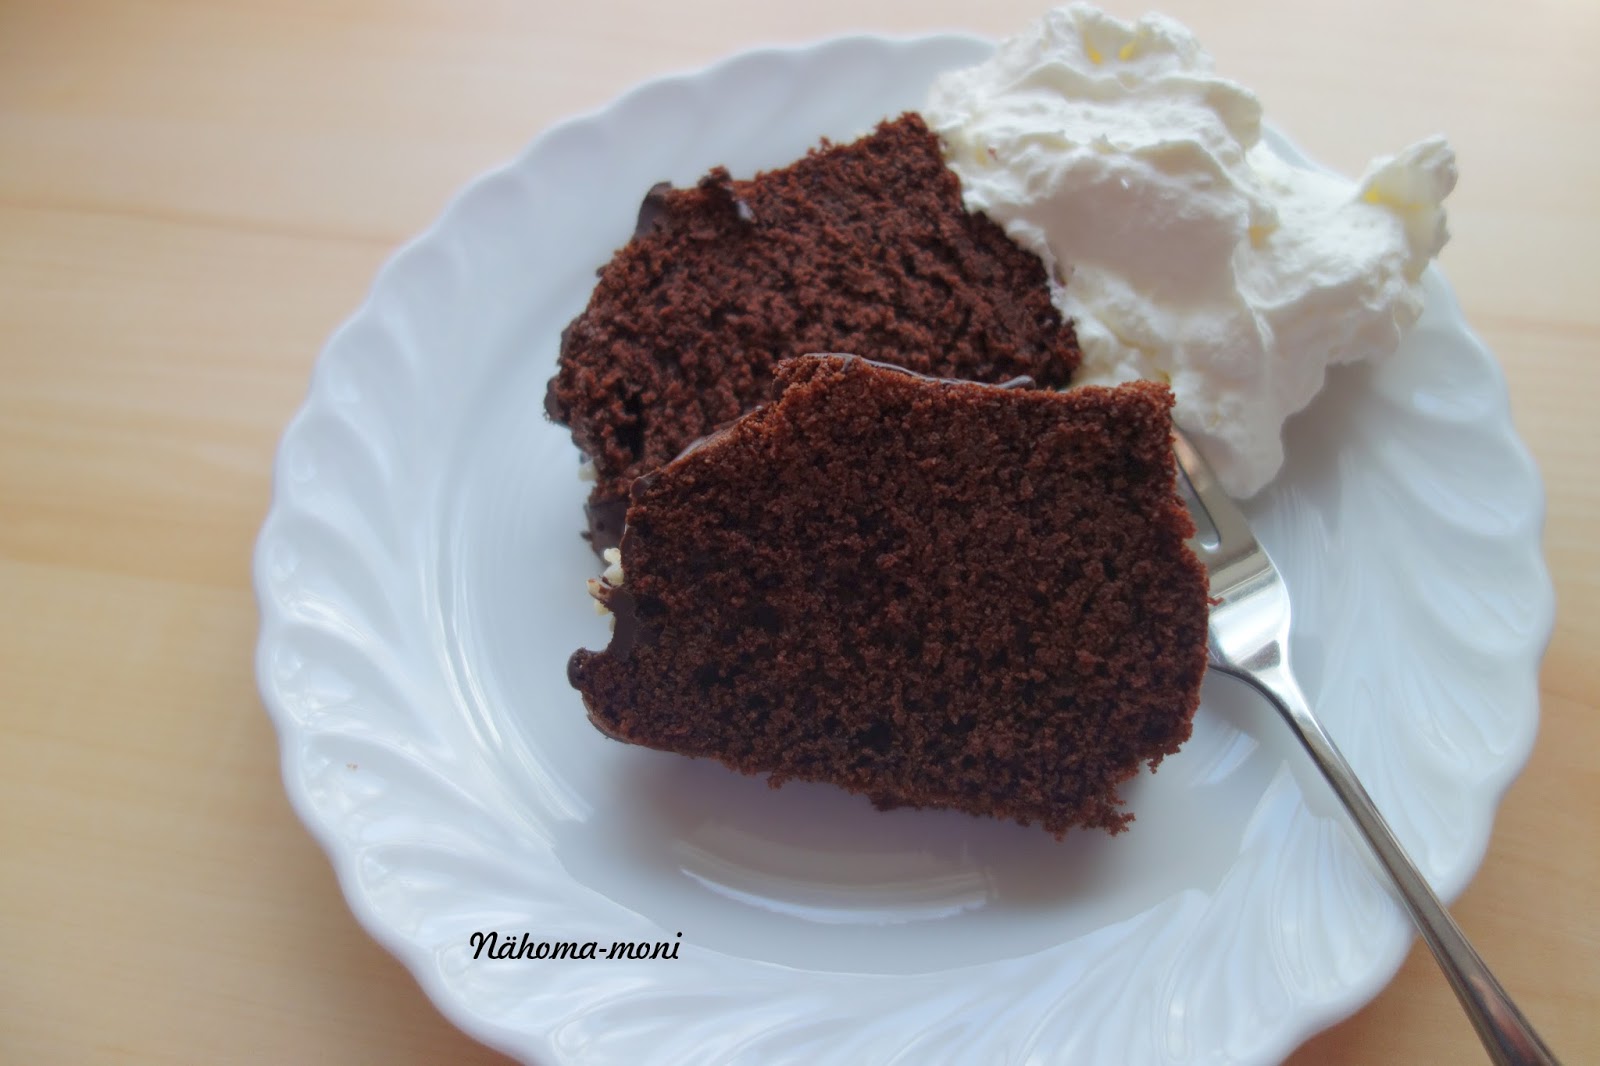 Naehoma - moni: Schokoladenkuchen